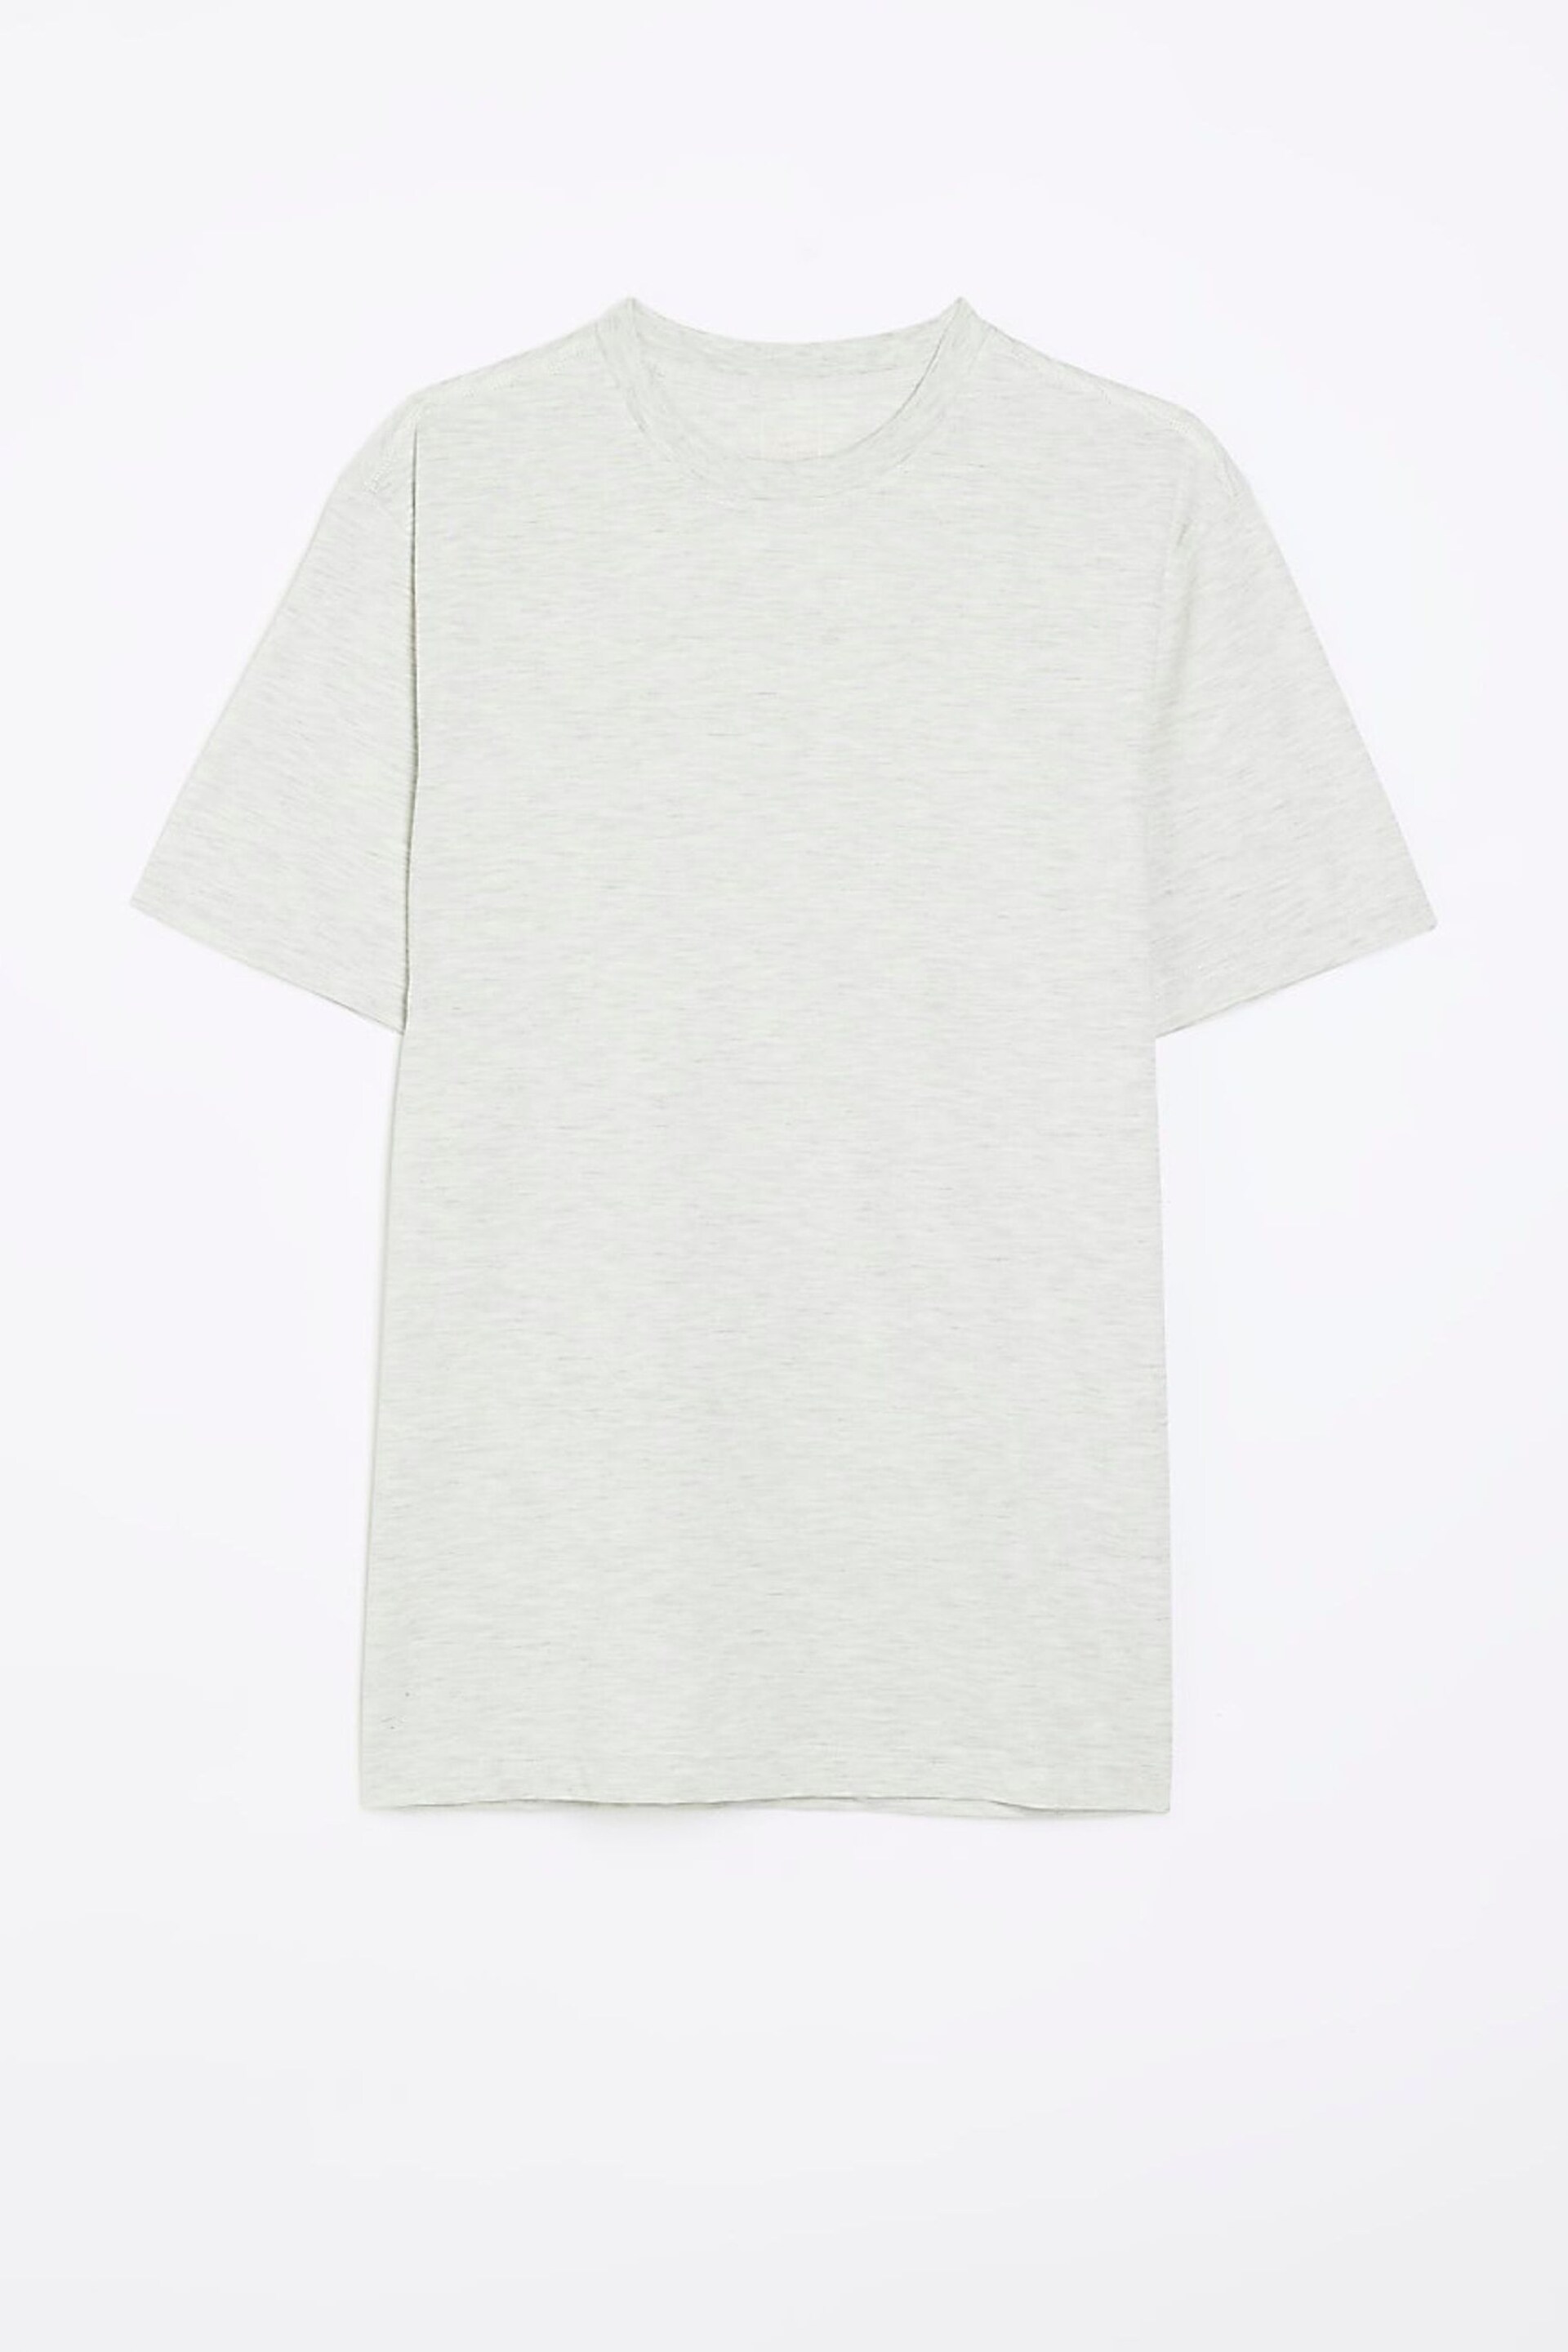 River Island Grey Slim Fit T-Shirt - Image 5 of 6